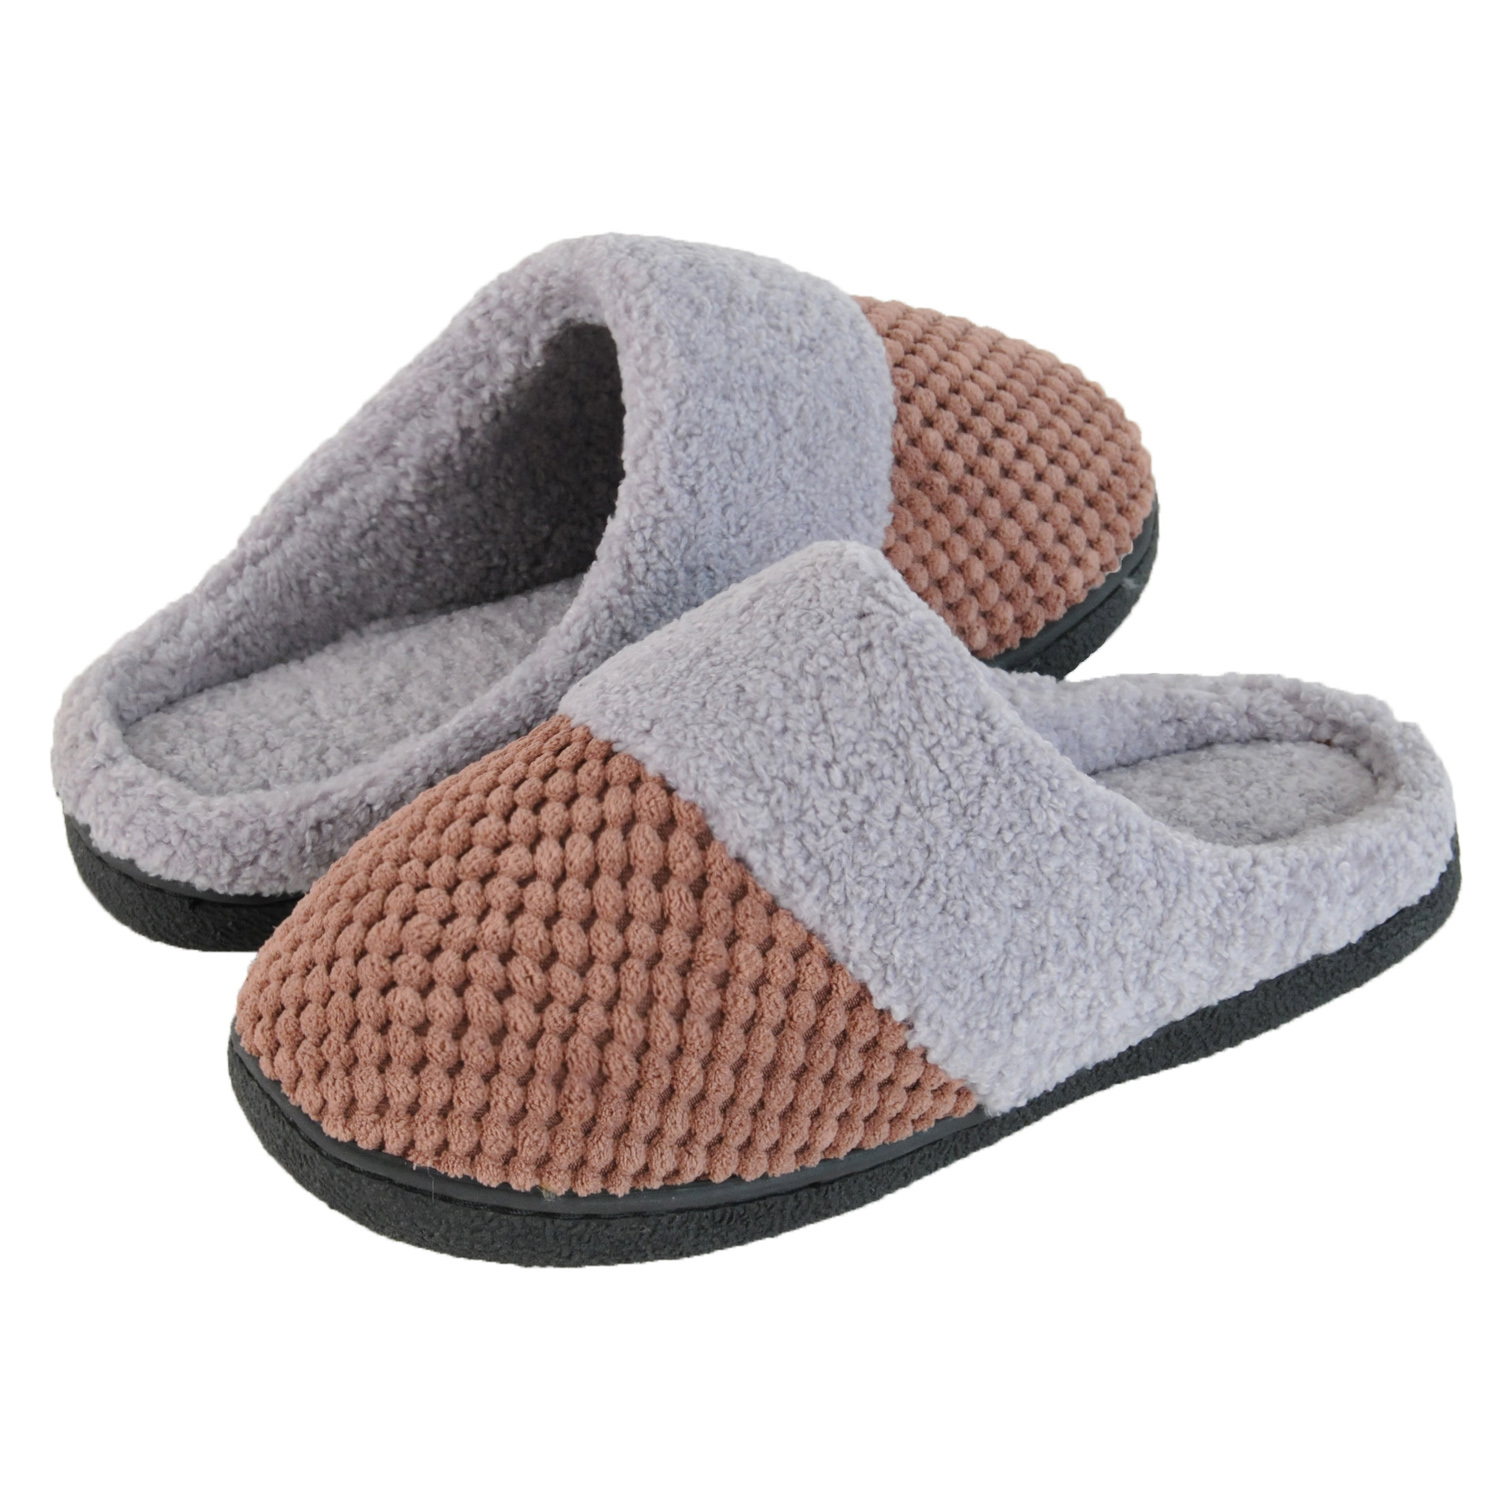 Womens Slip-On Knit Slippers Memory Foam Slippers Fuzzy Wool-Like Plush Fleece Lined House Shoes Indoor/Outdoor Anti-Skid Rubber Sole